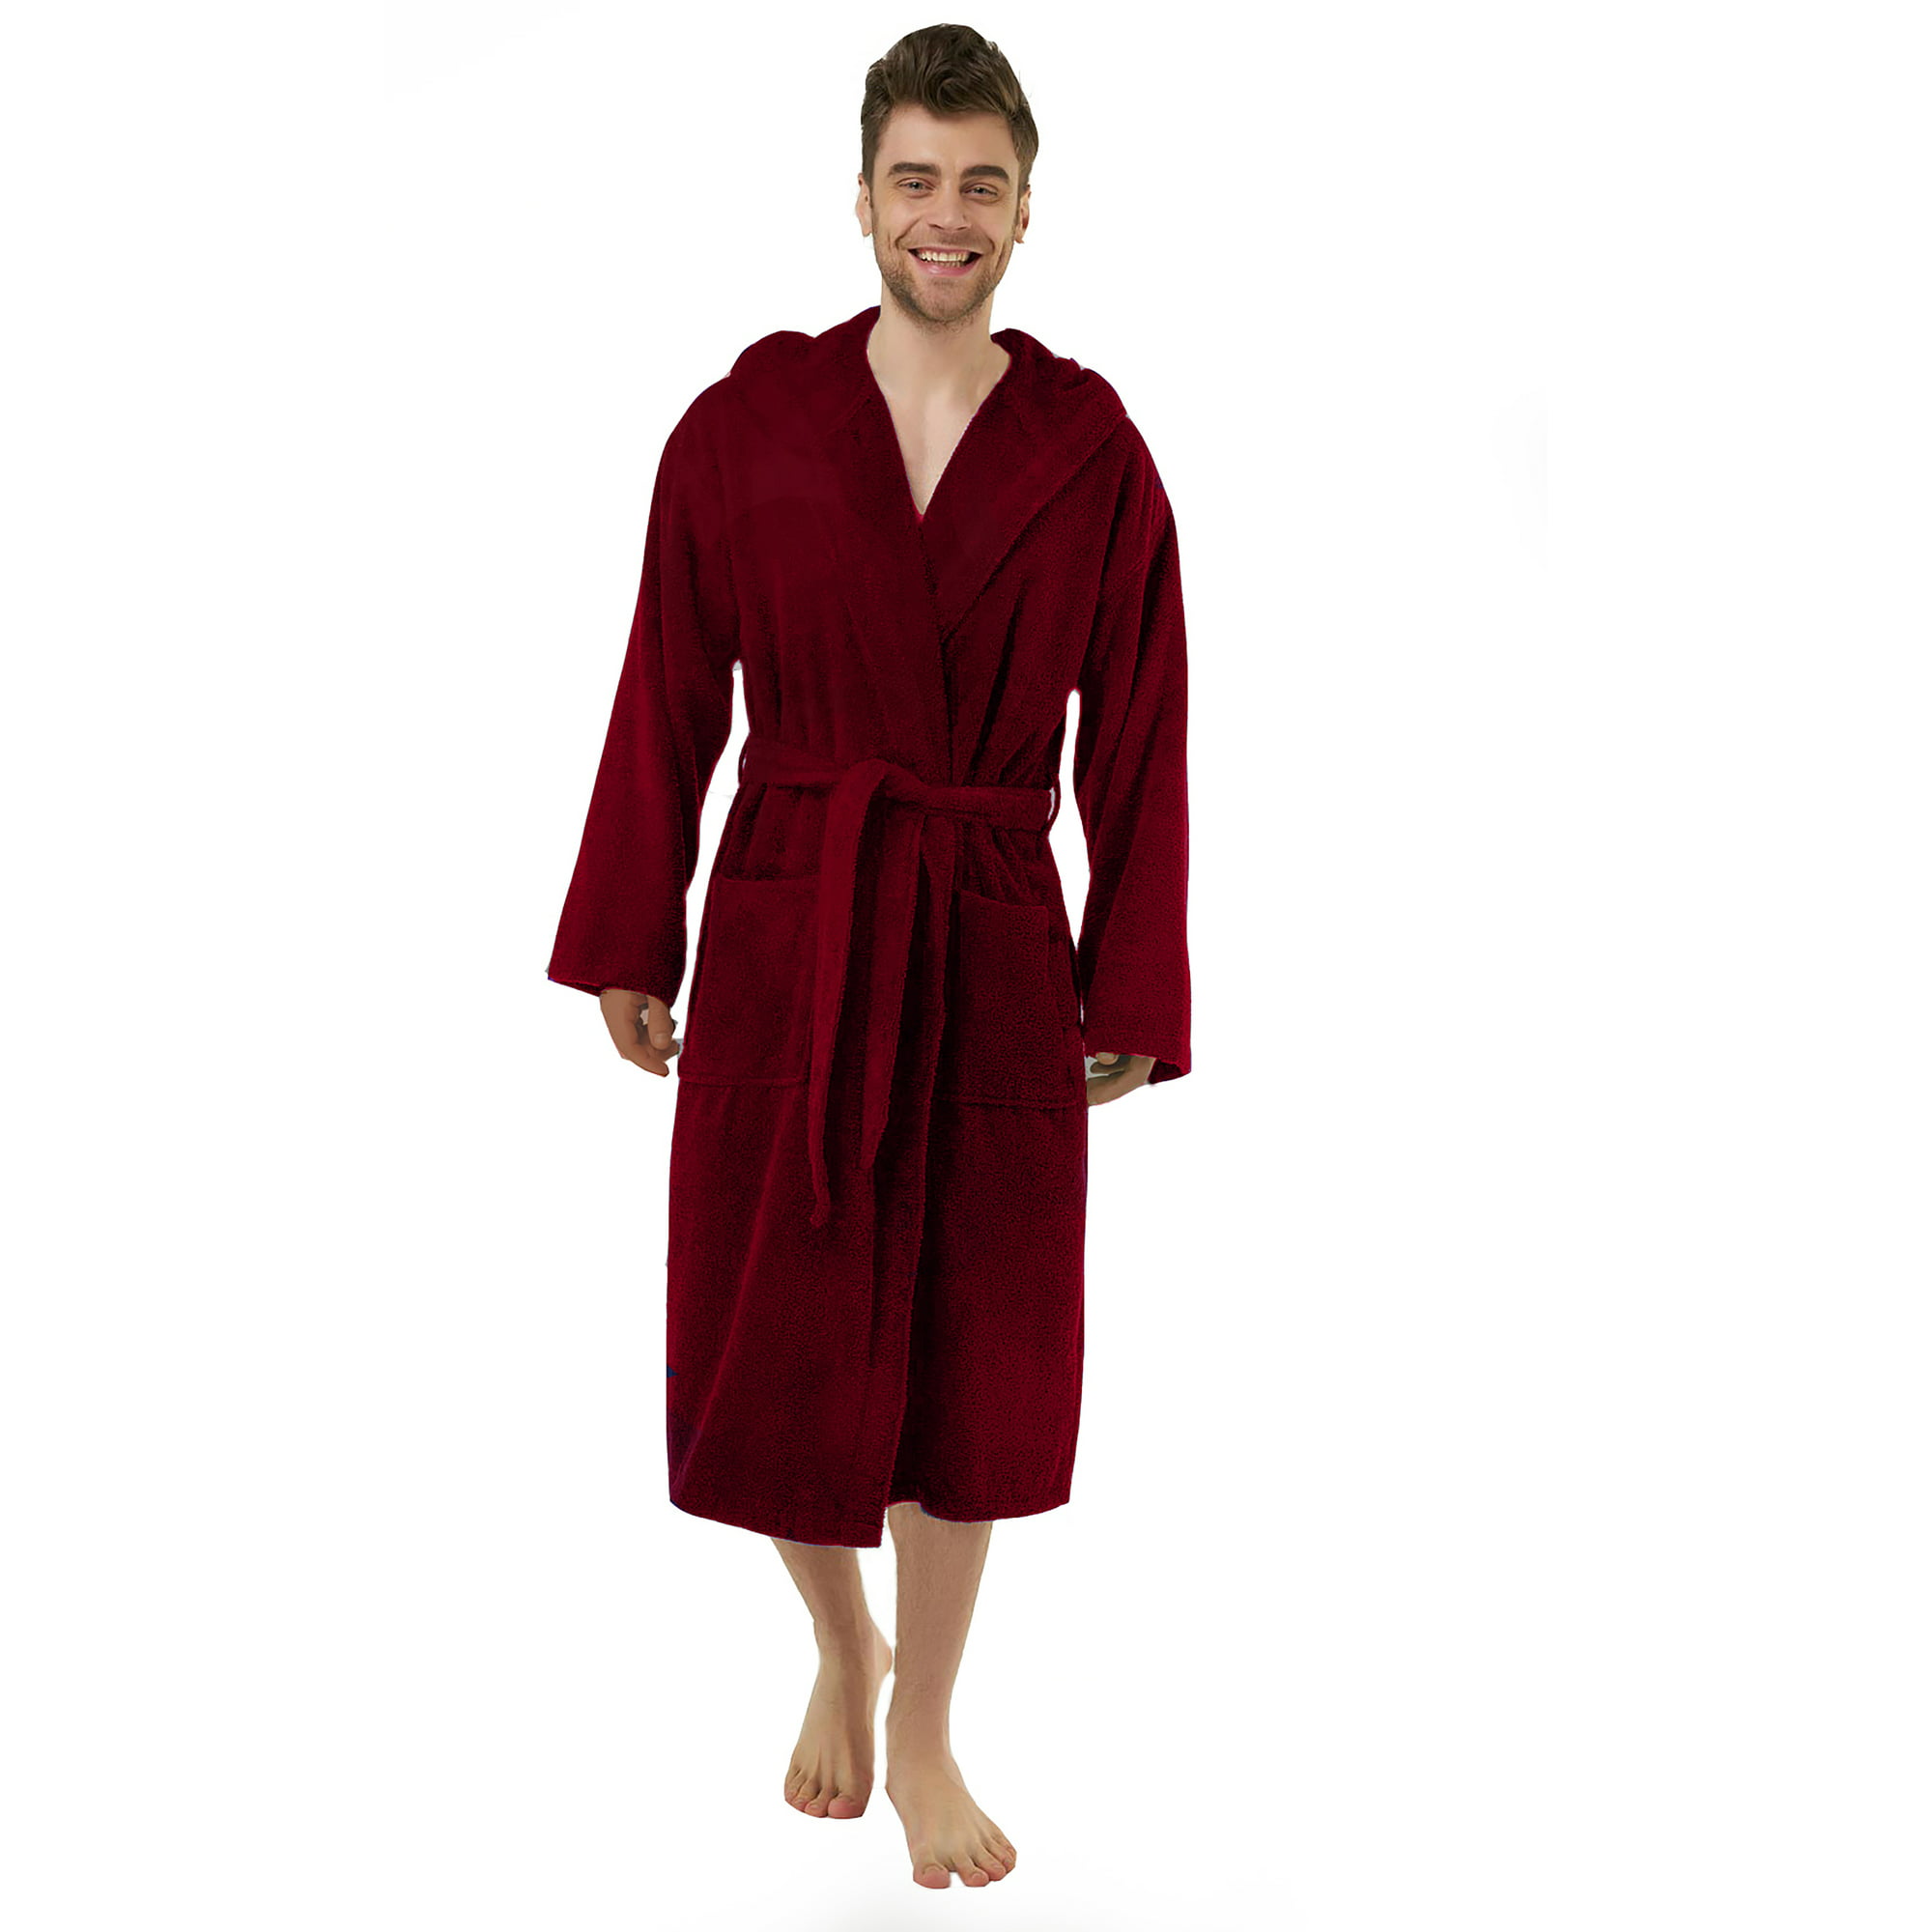 Spa & Resort Sales Burgundy Hooded Bath Robe for Men, Adult XXL Full Length. Spa & Resort Sales